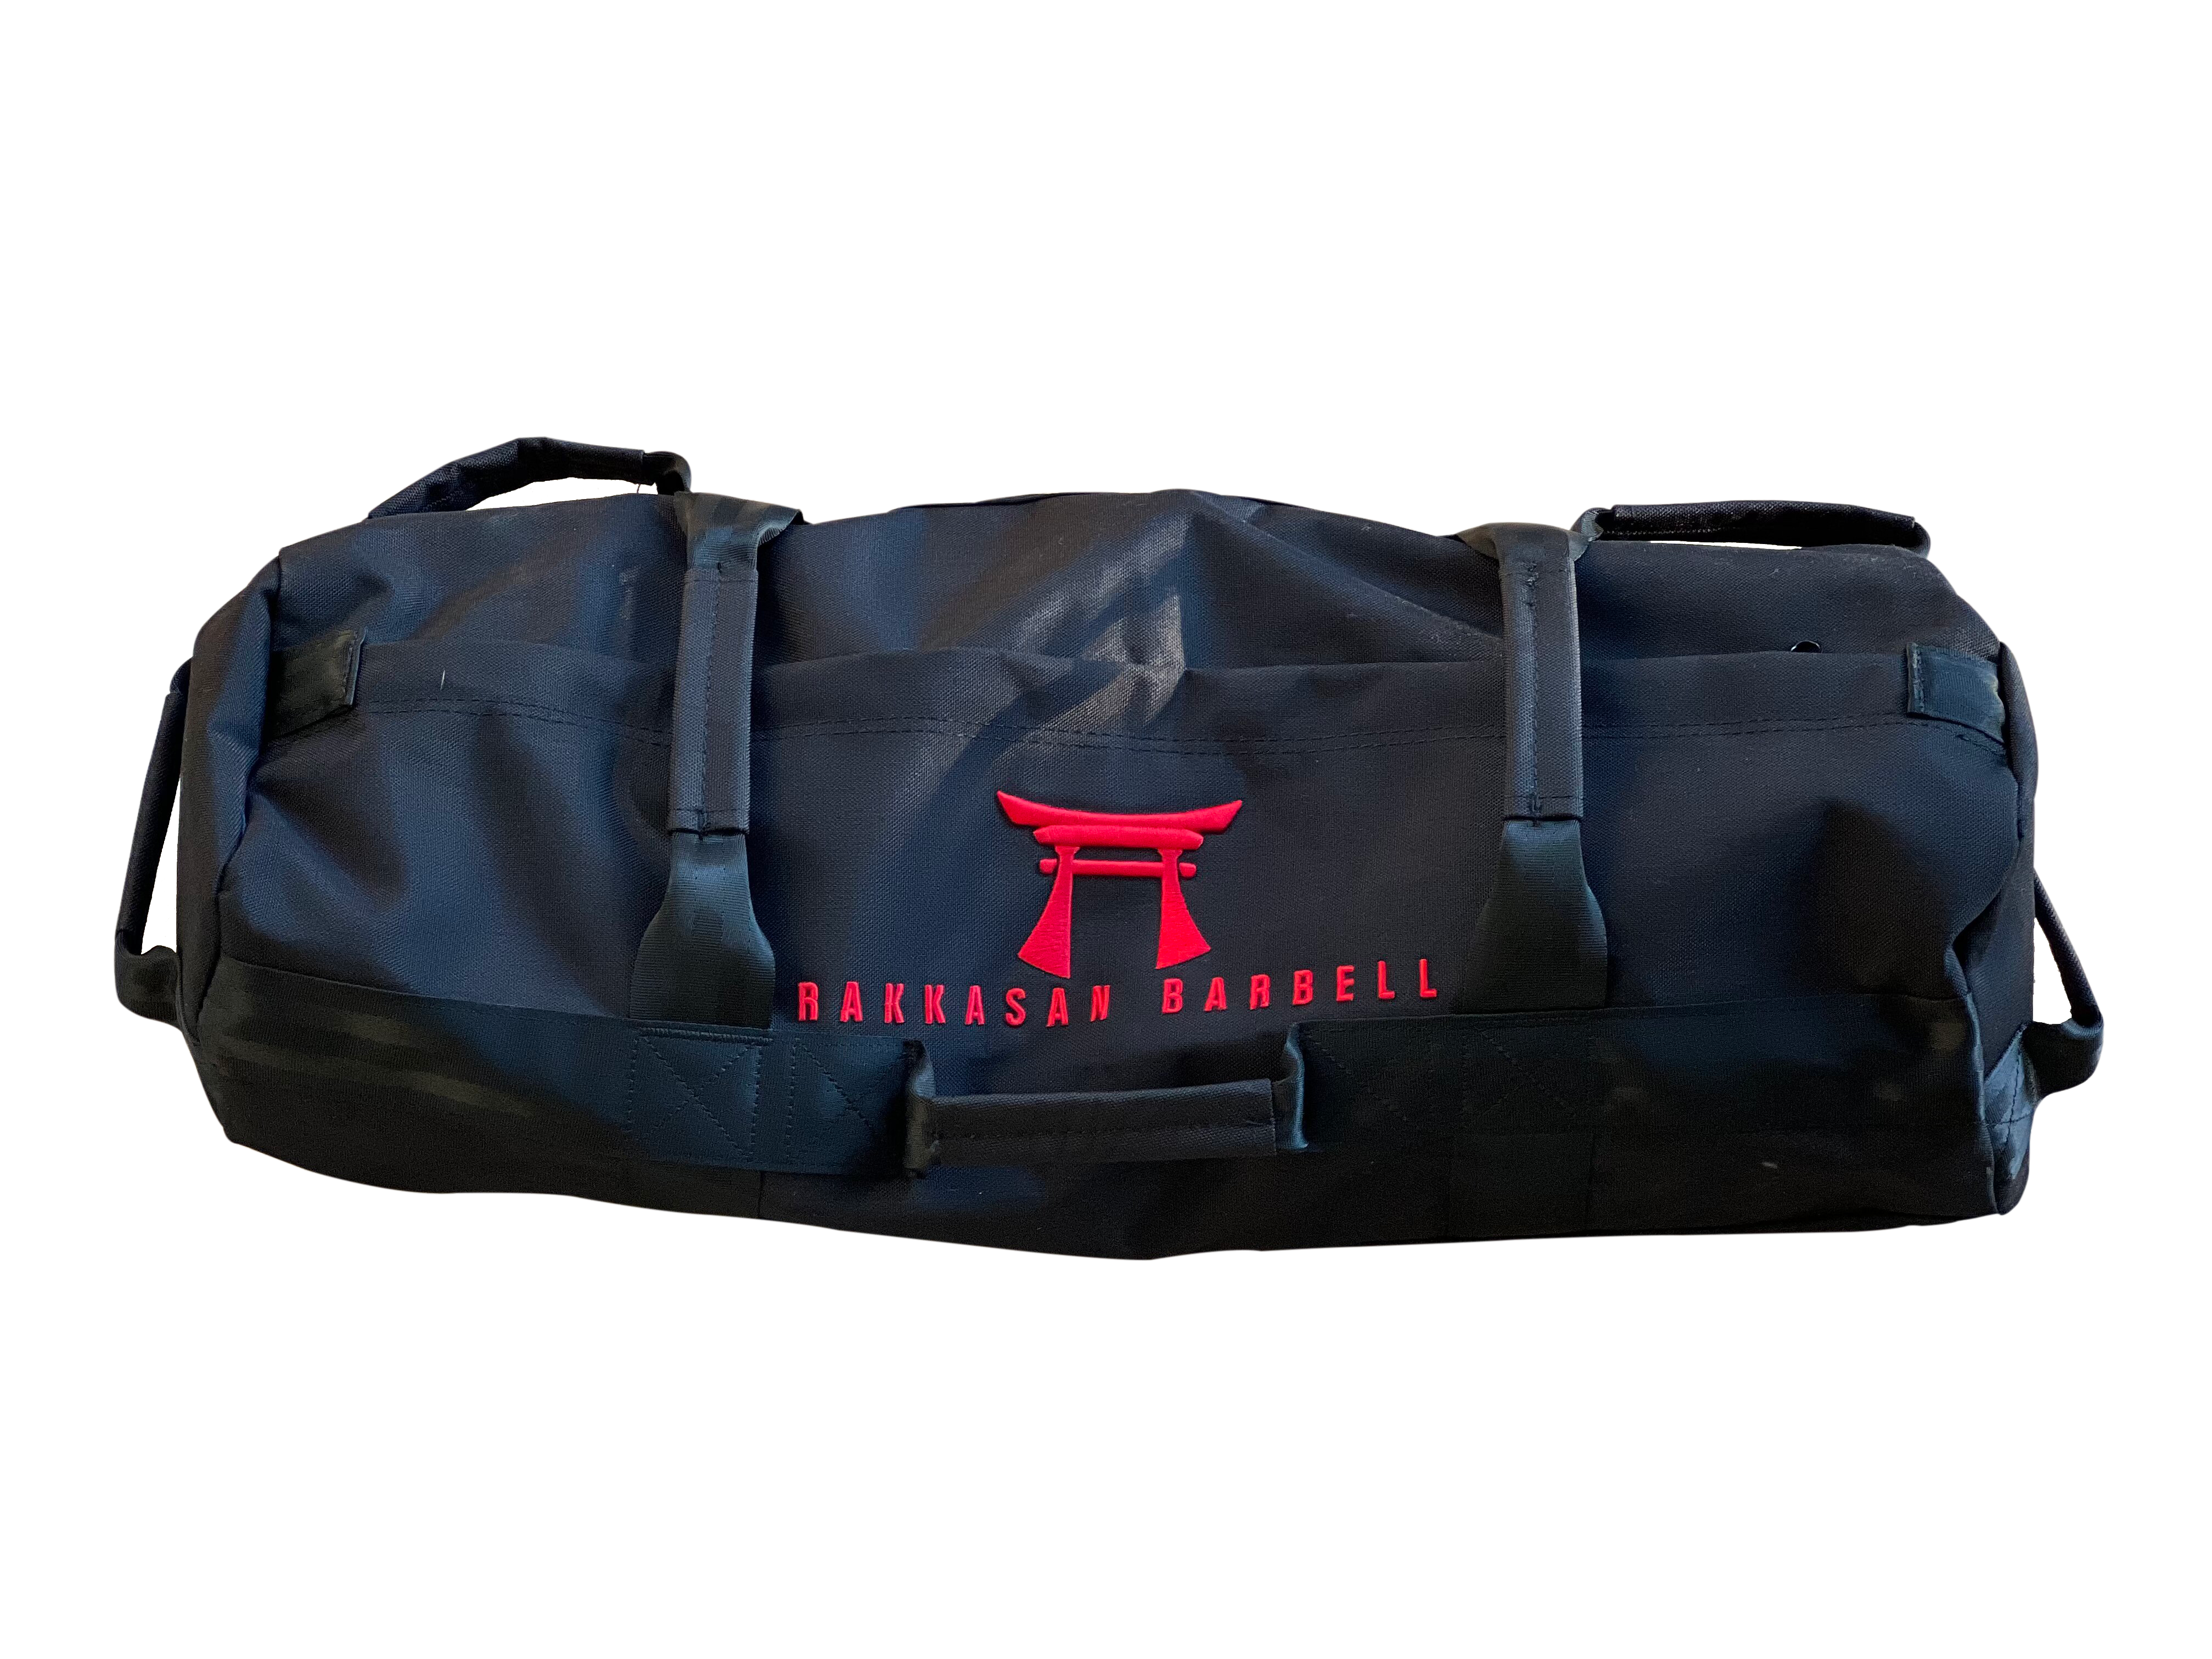 Rakkasan – Fitness Pound Sandbag 75 Barbell